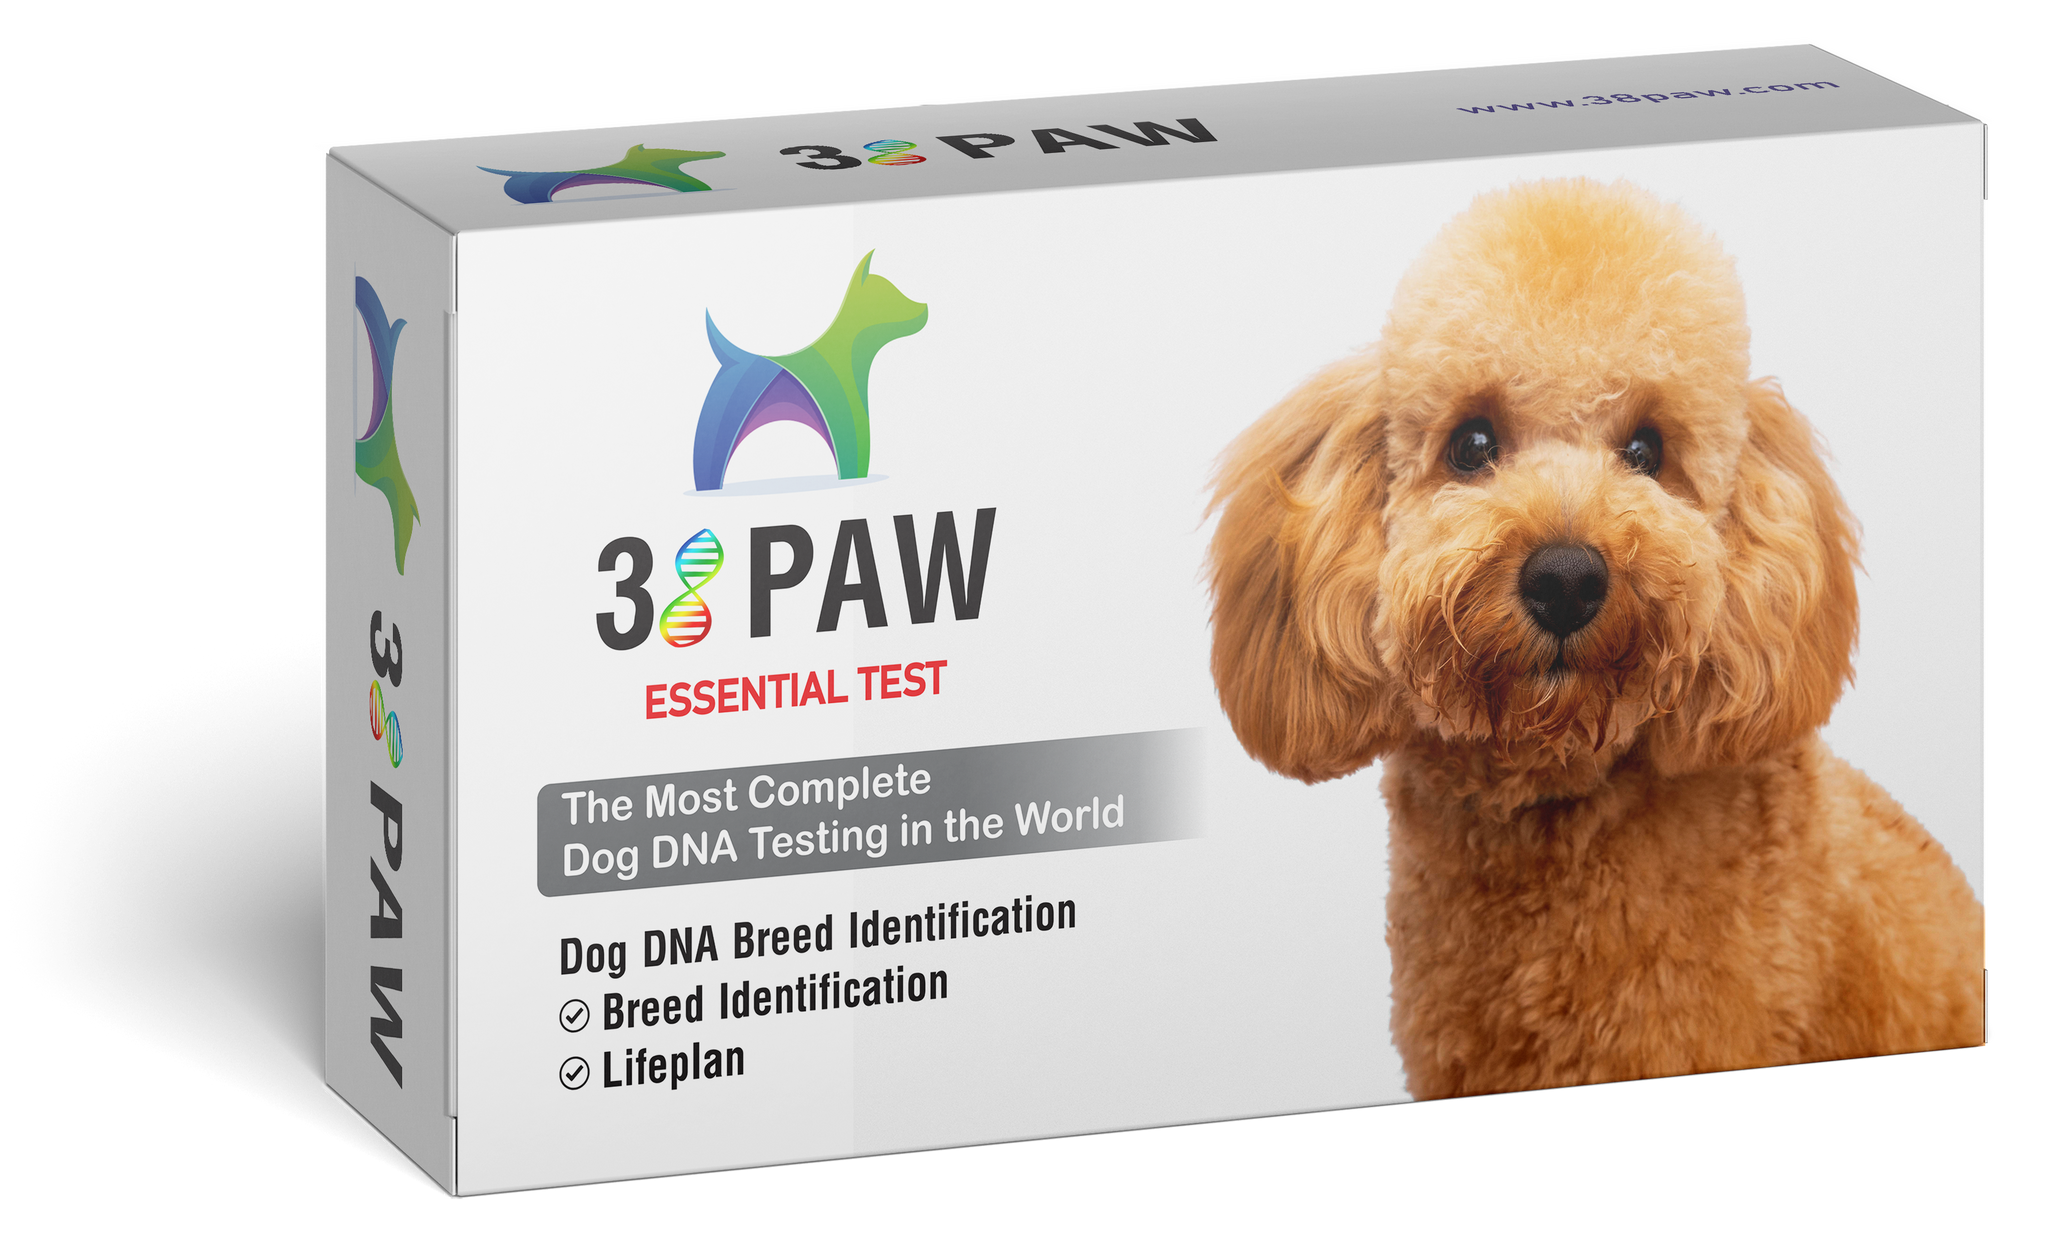 Dog DNA Breed Identification